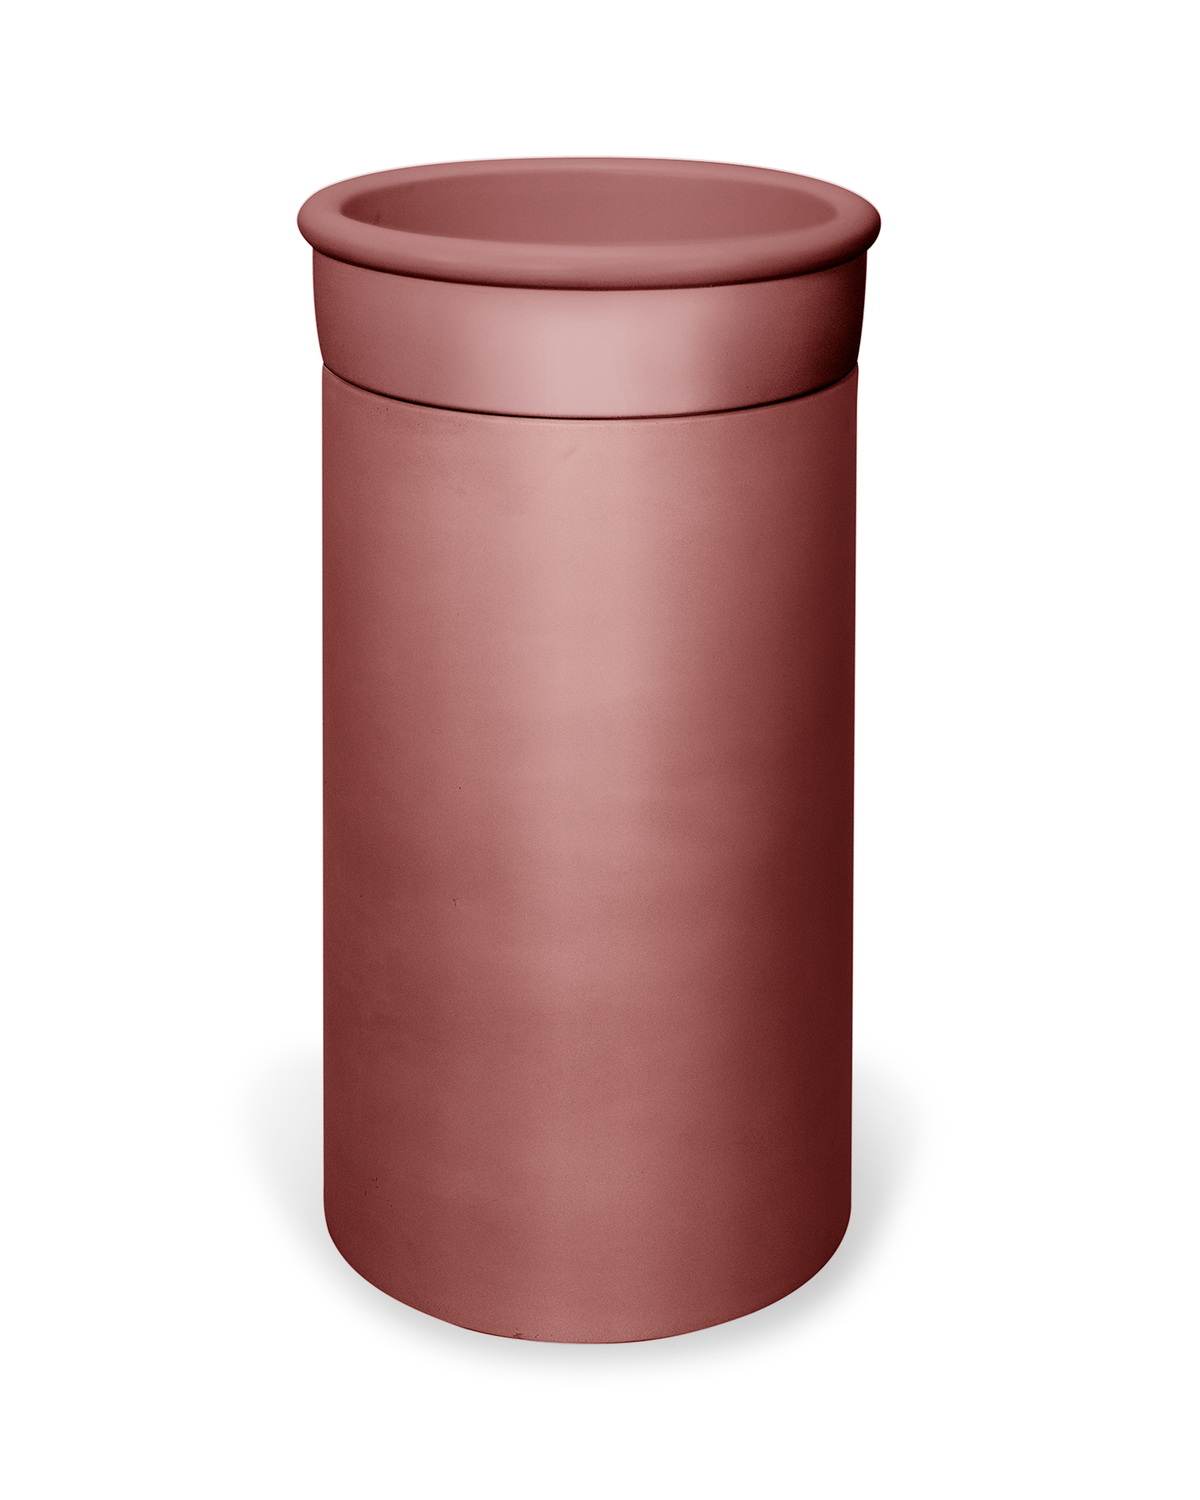 Cylinder - Tubb Basin (Musk)